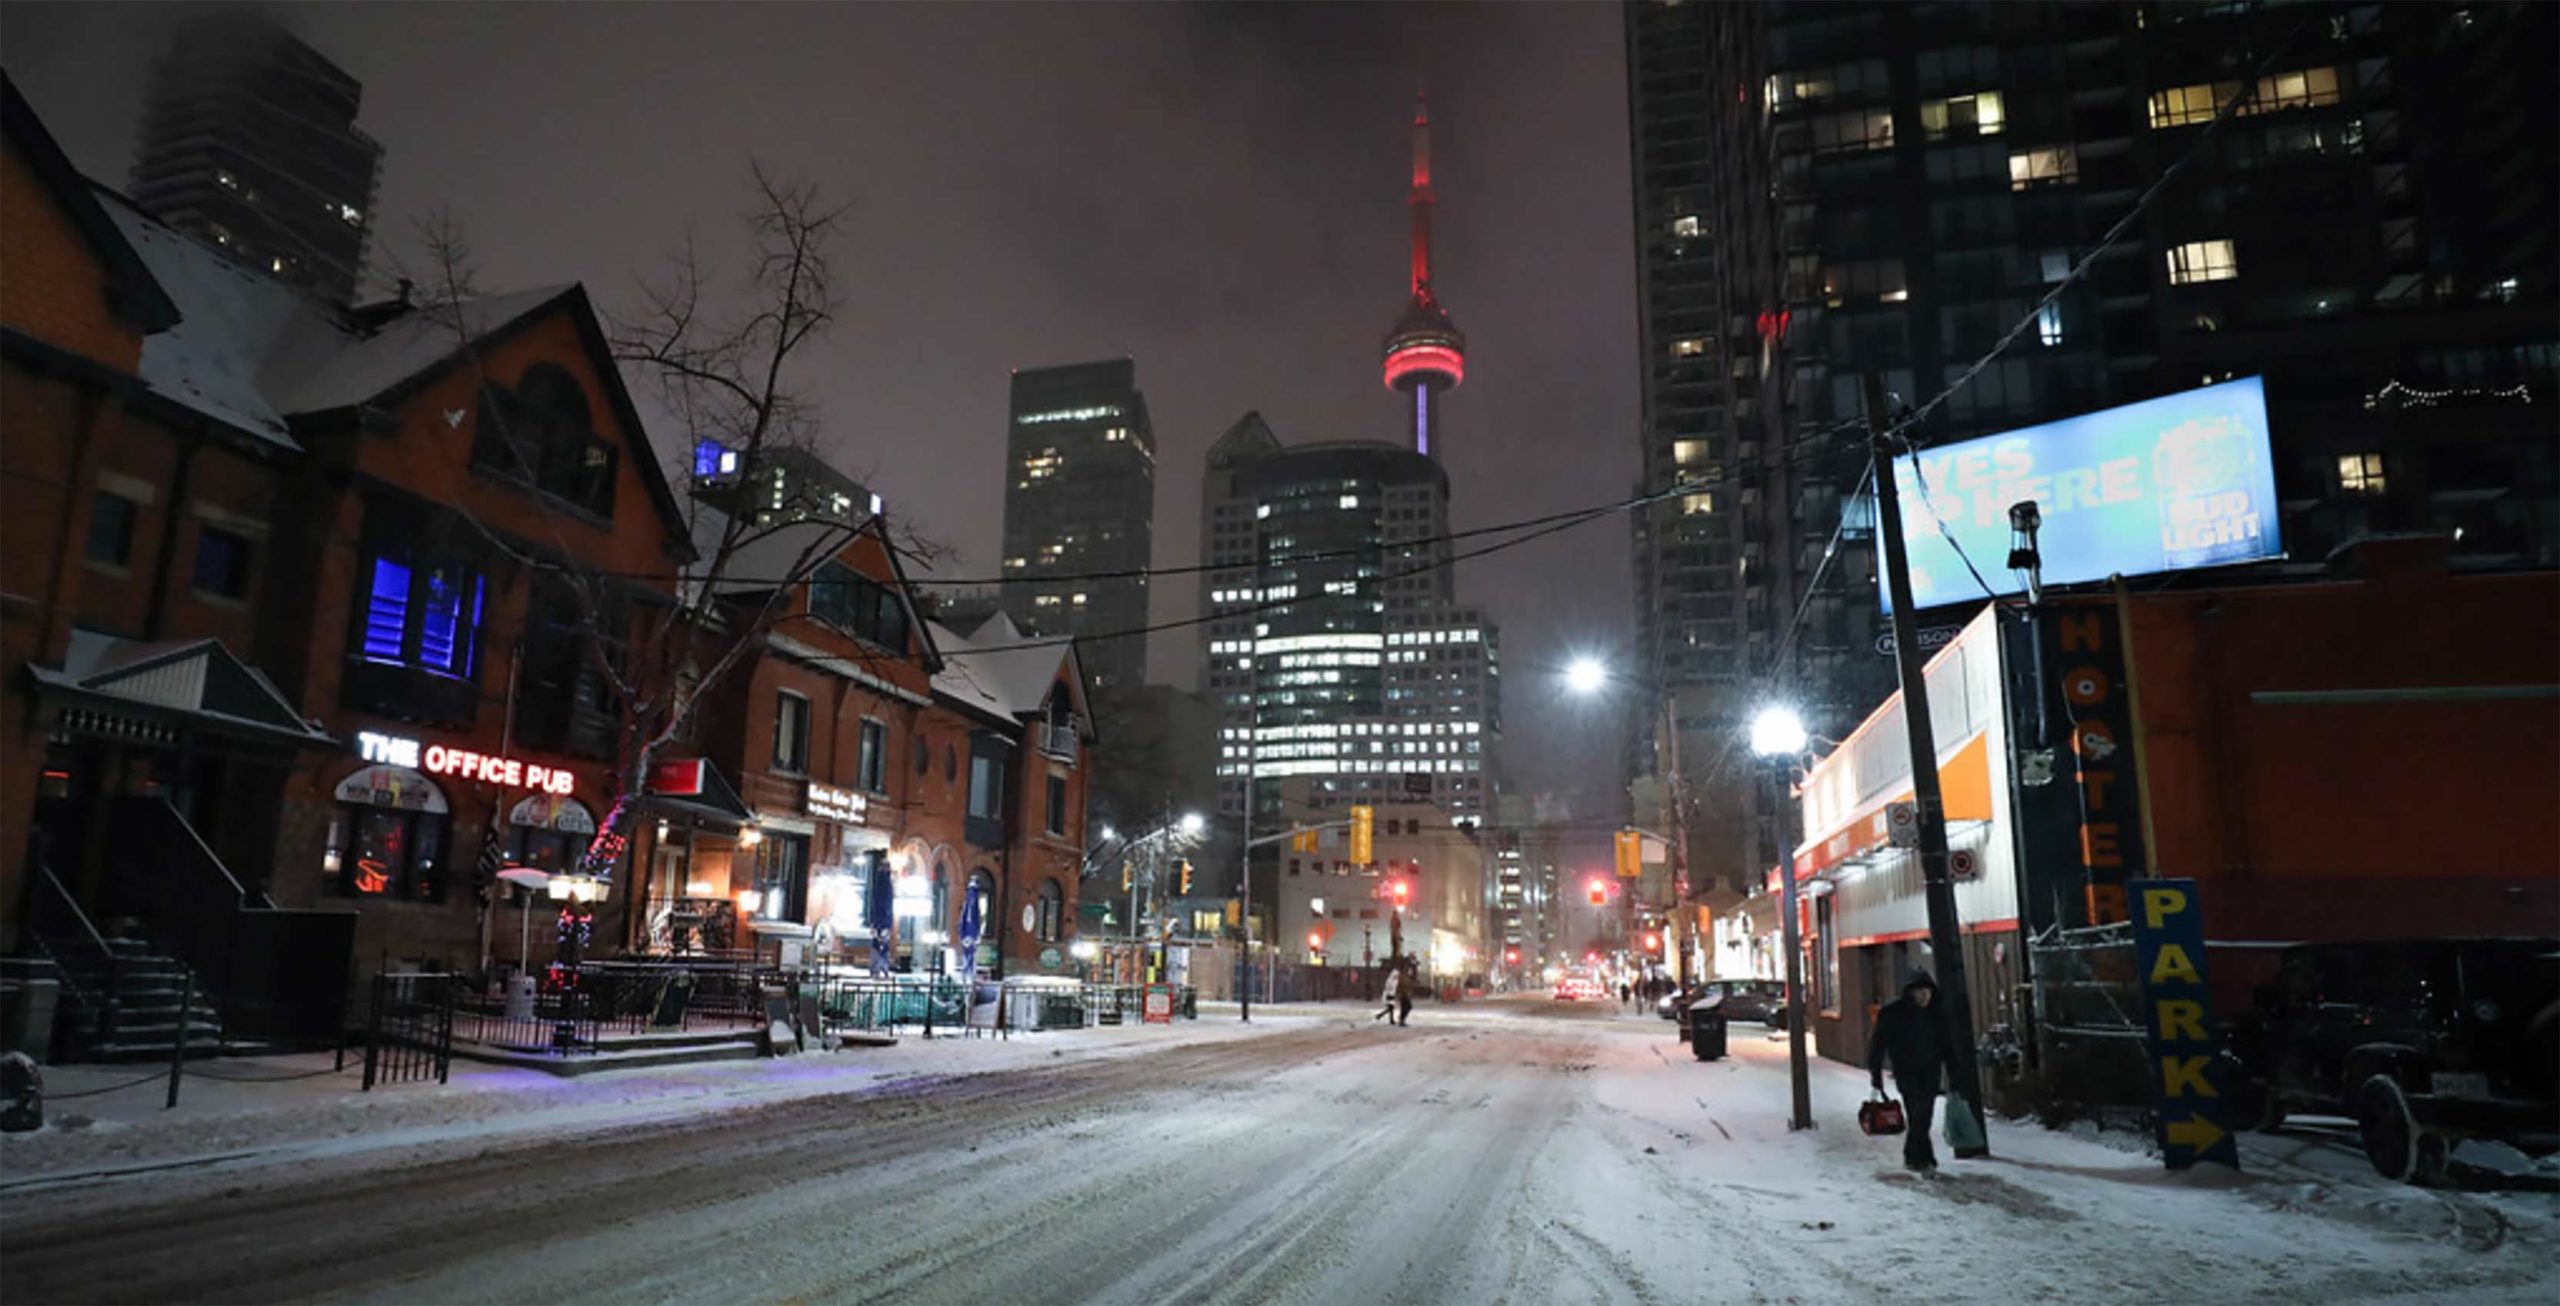 Toronto in the winter